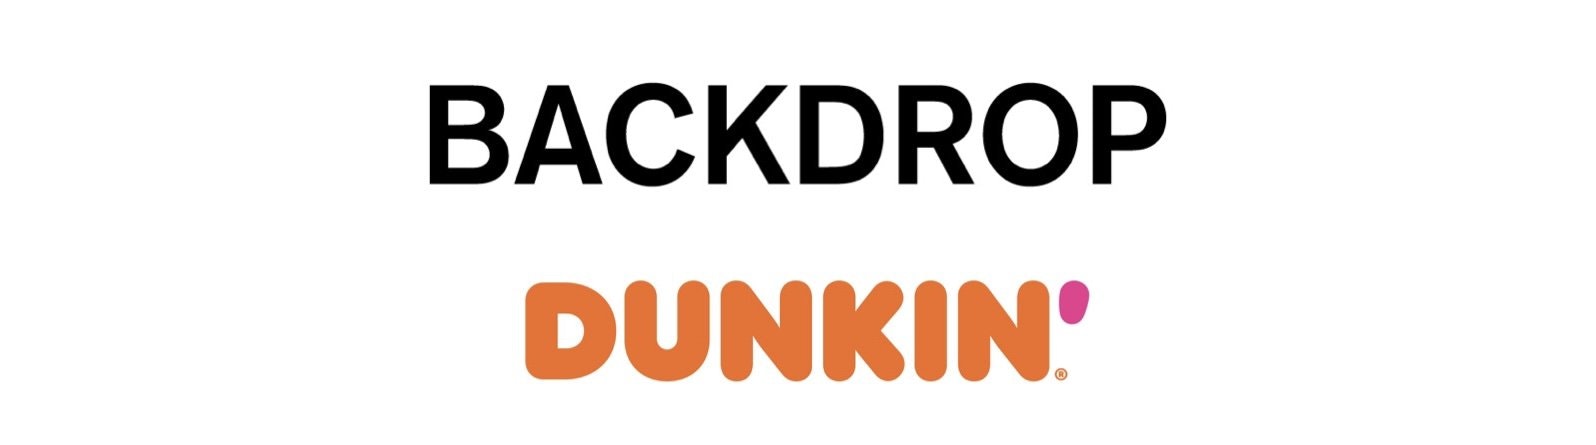 Backdrop x Dunkin logos